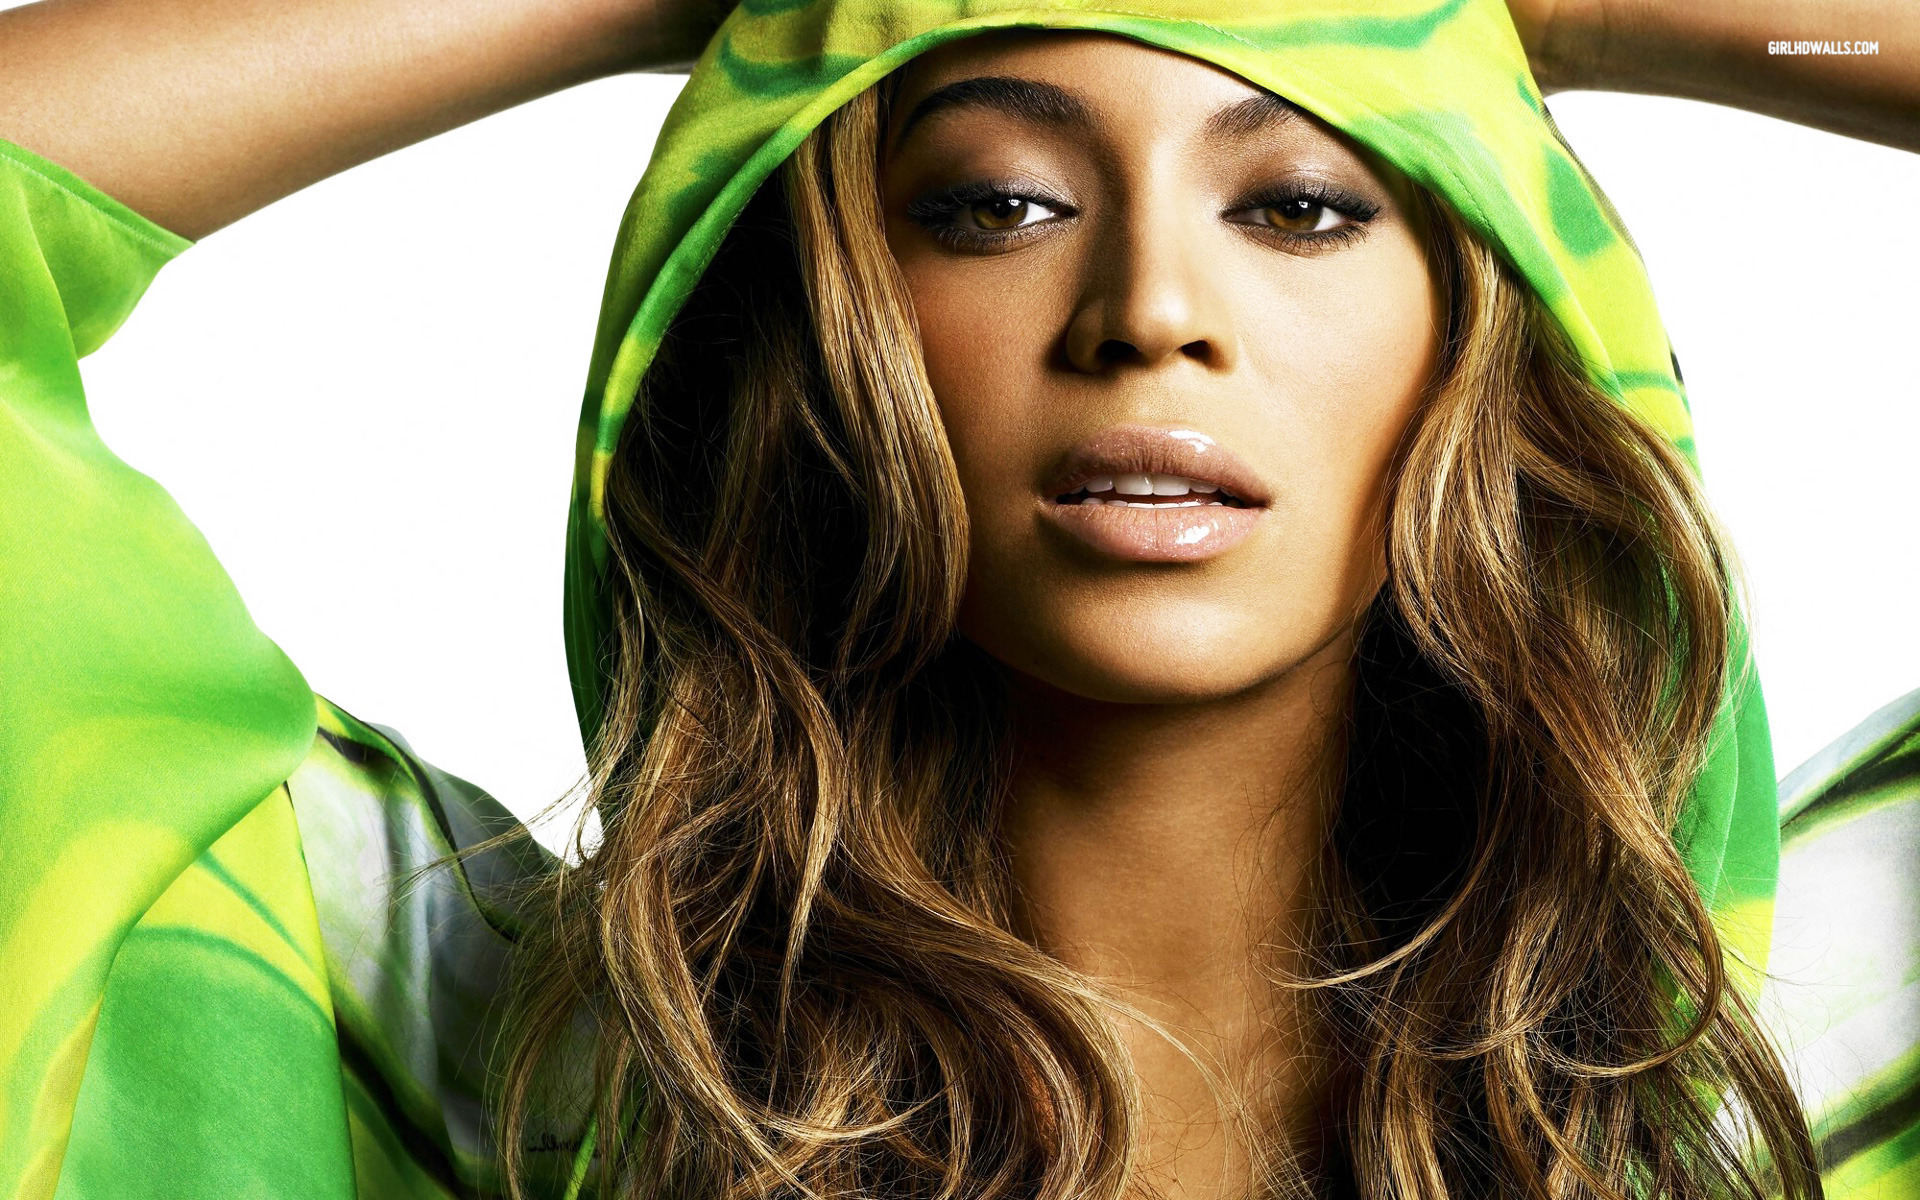 Beyonce Knowles Wallpaper